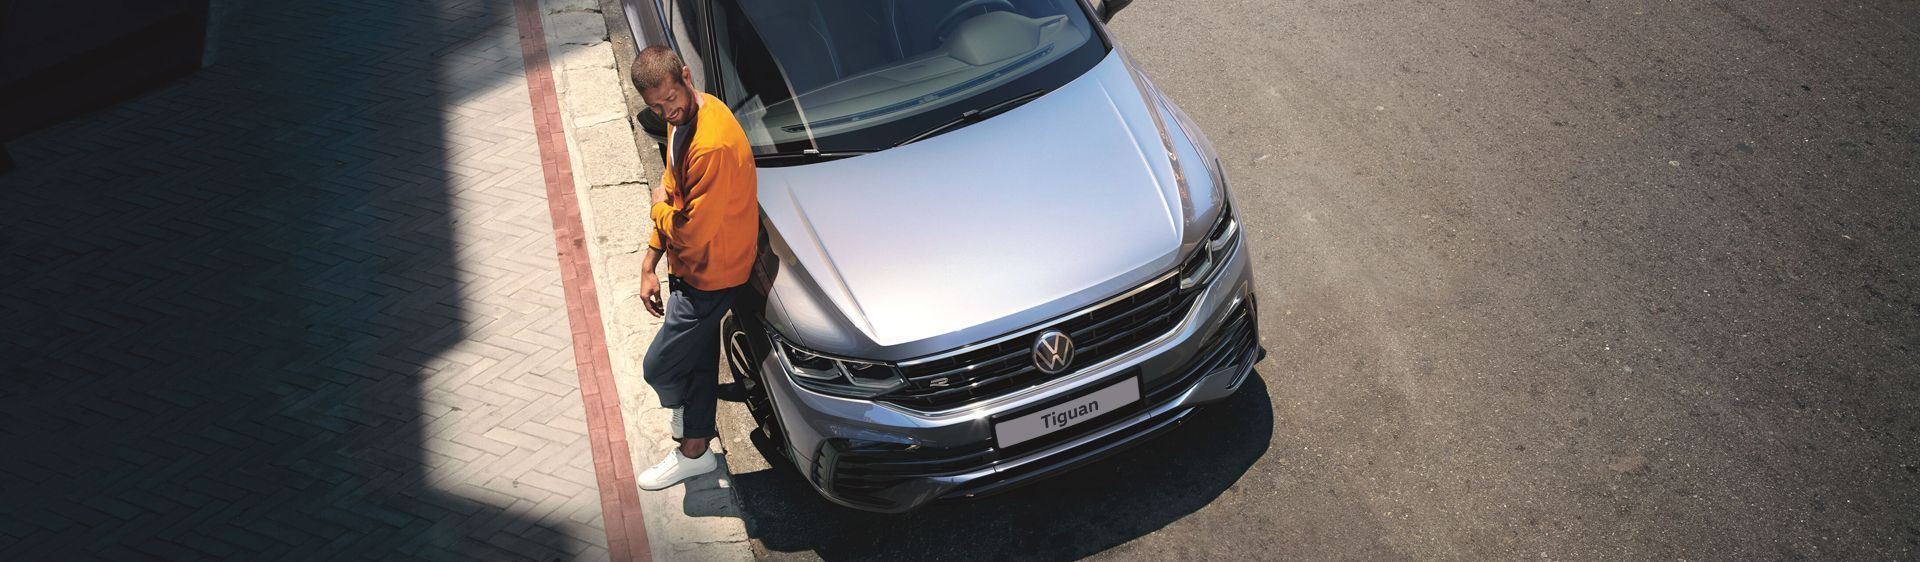 497 объявлений о продаже дорогих Volkswagen Tiguan